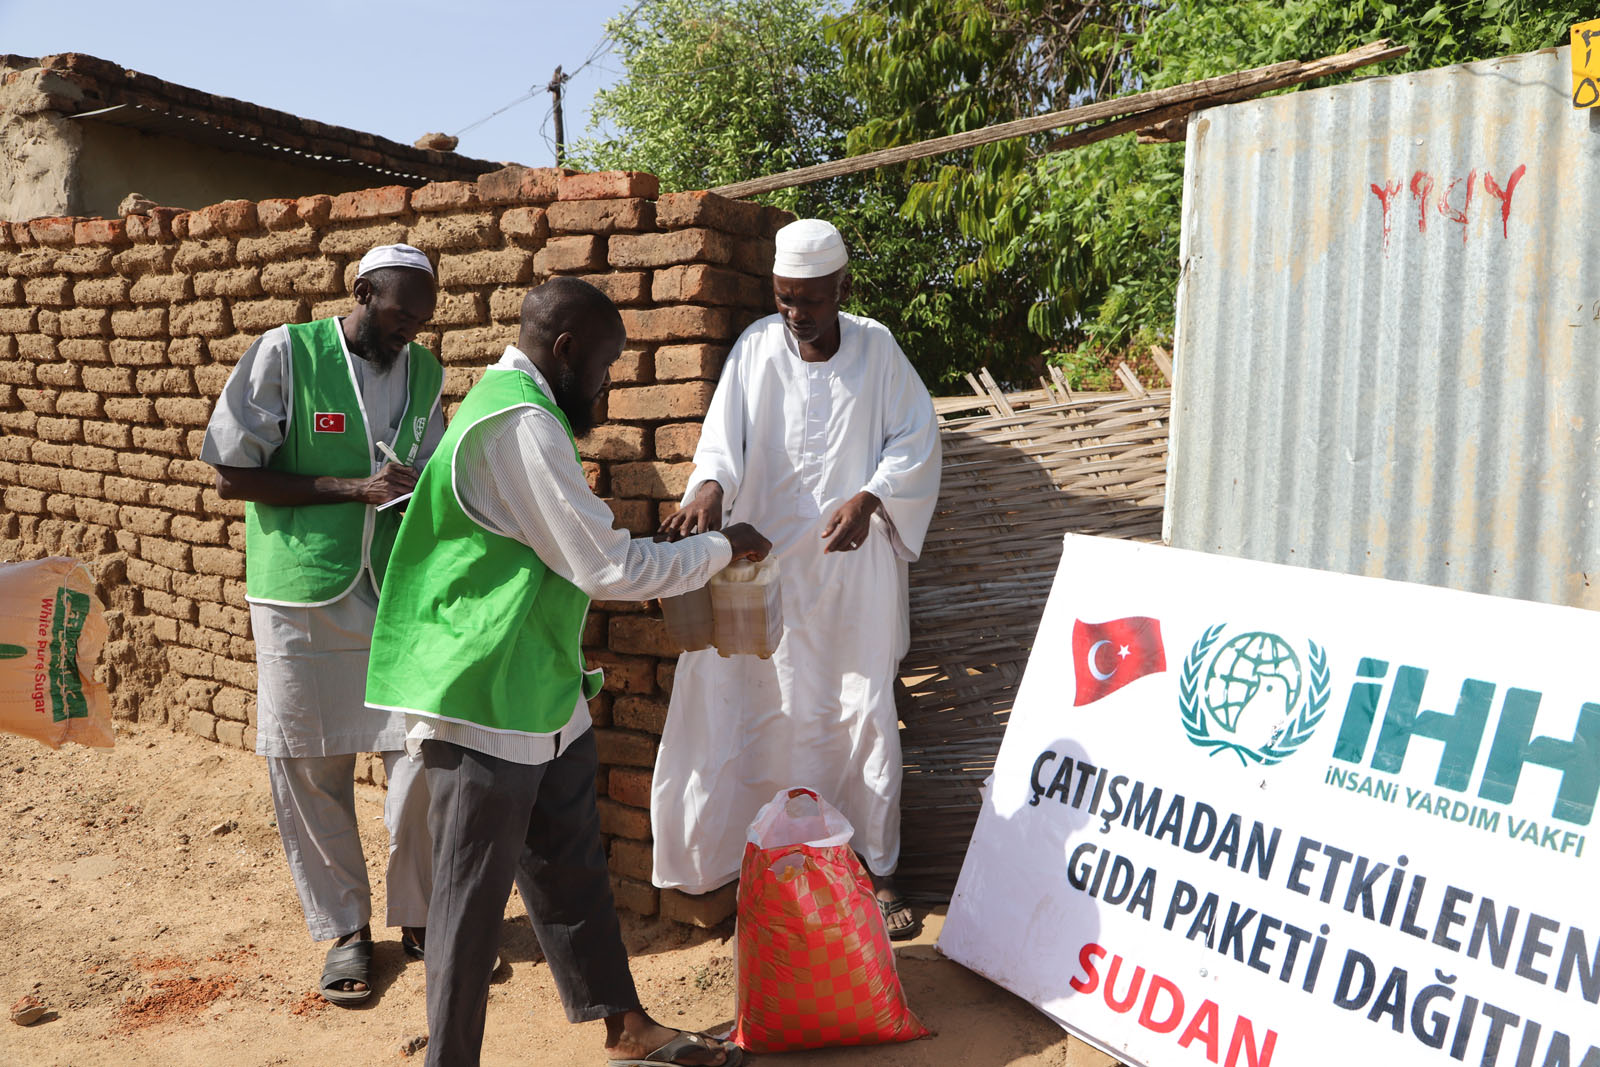 Food Aid for Sudan War Victims